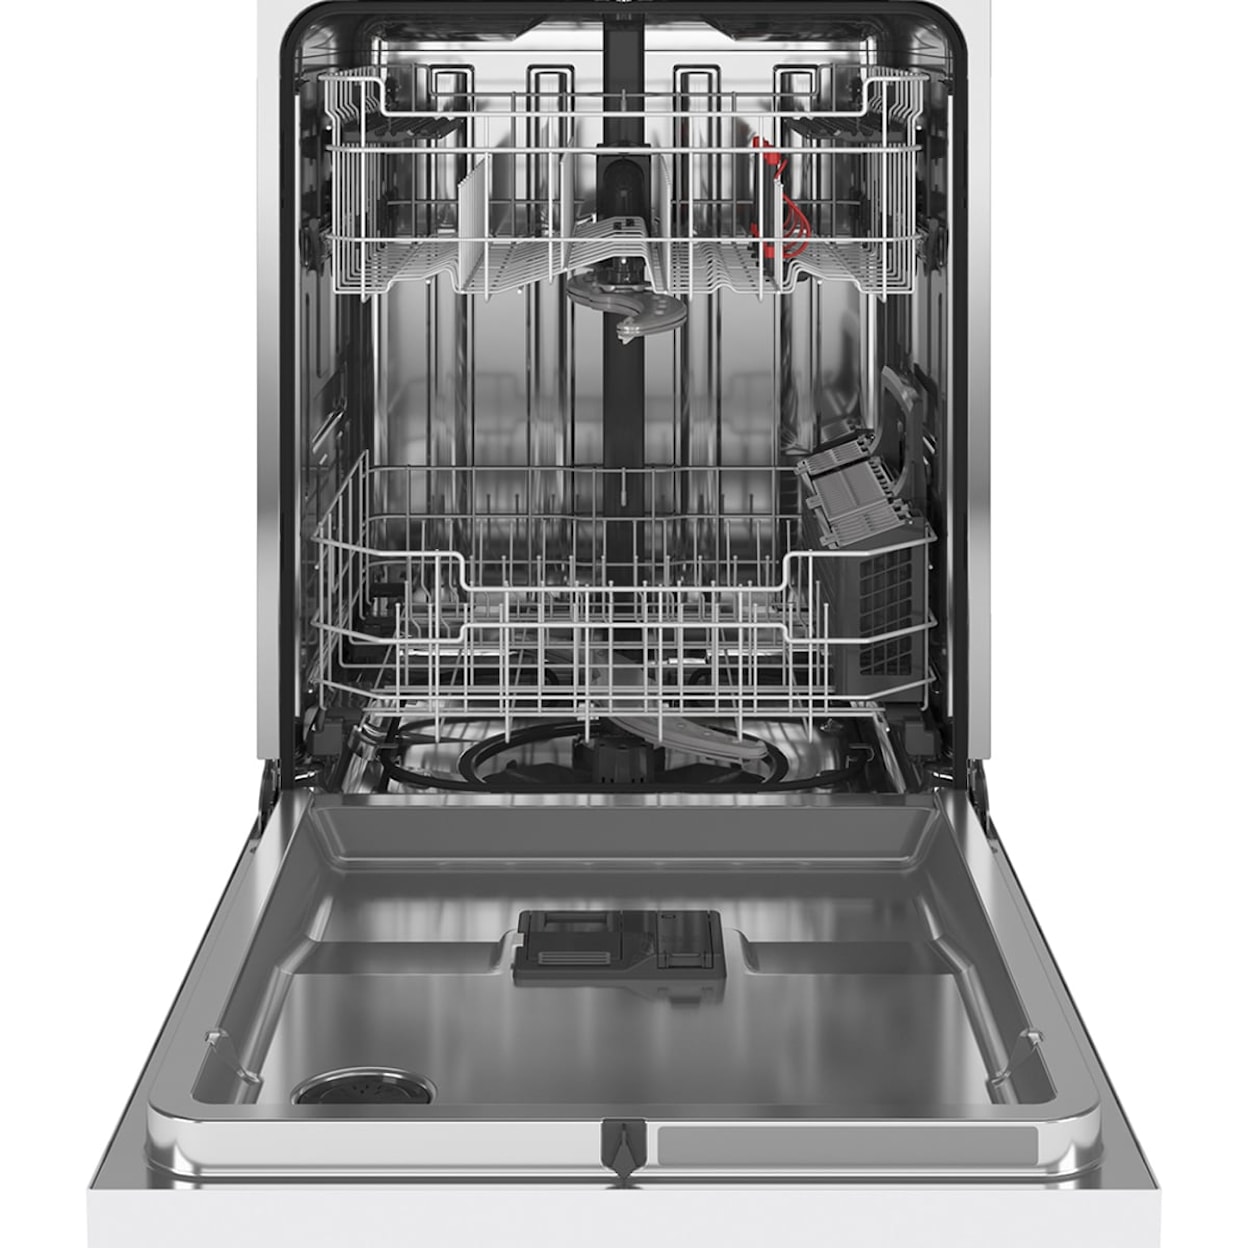 GE Appliances GE Appliances Dishwasher